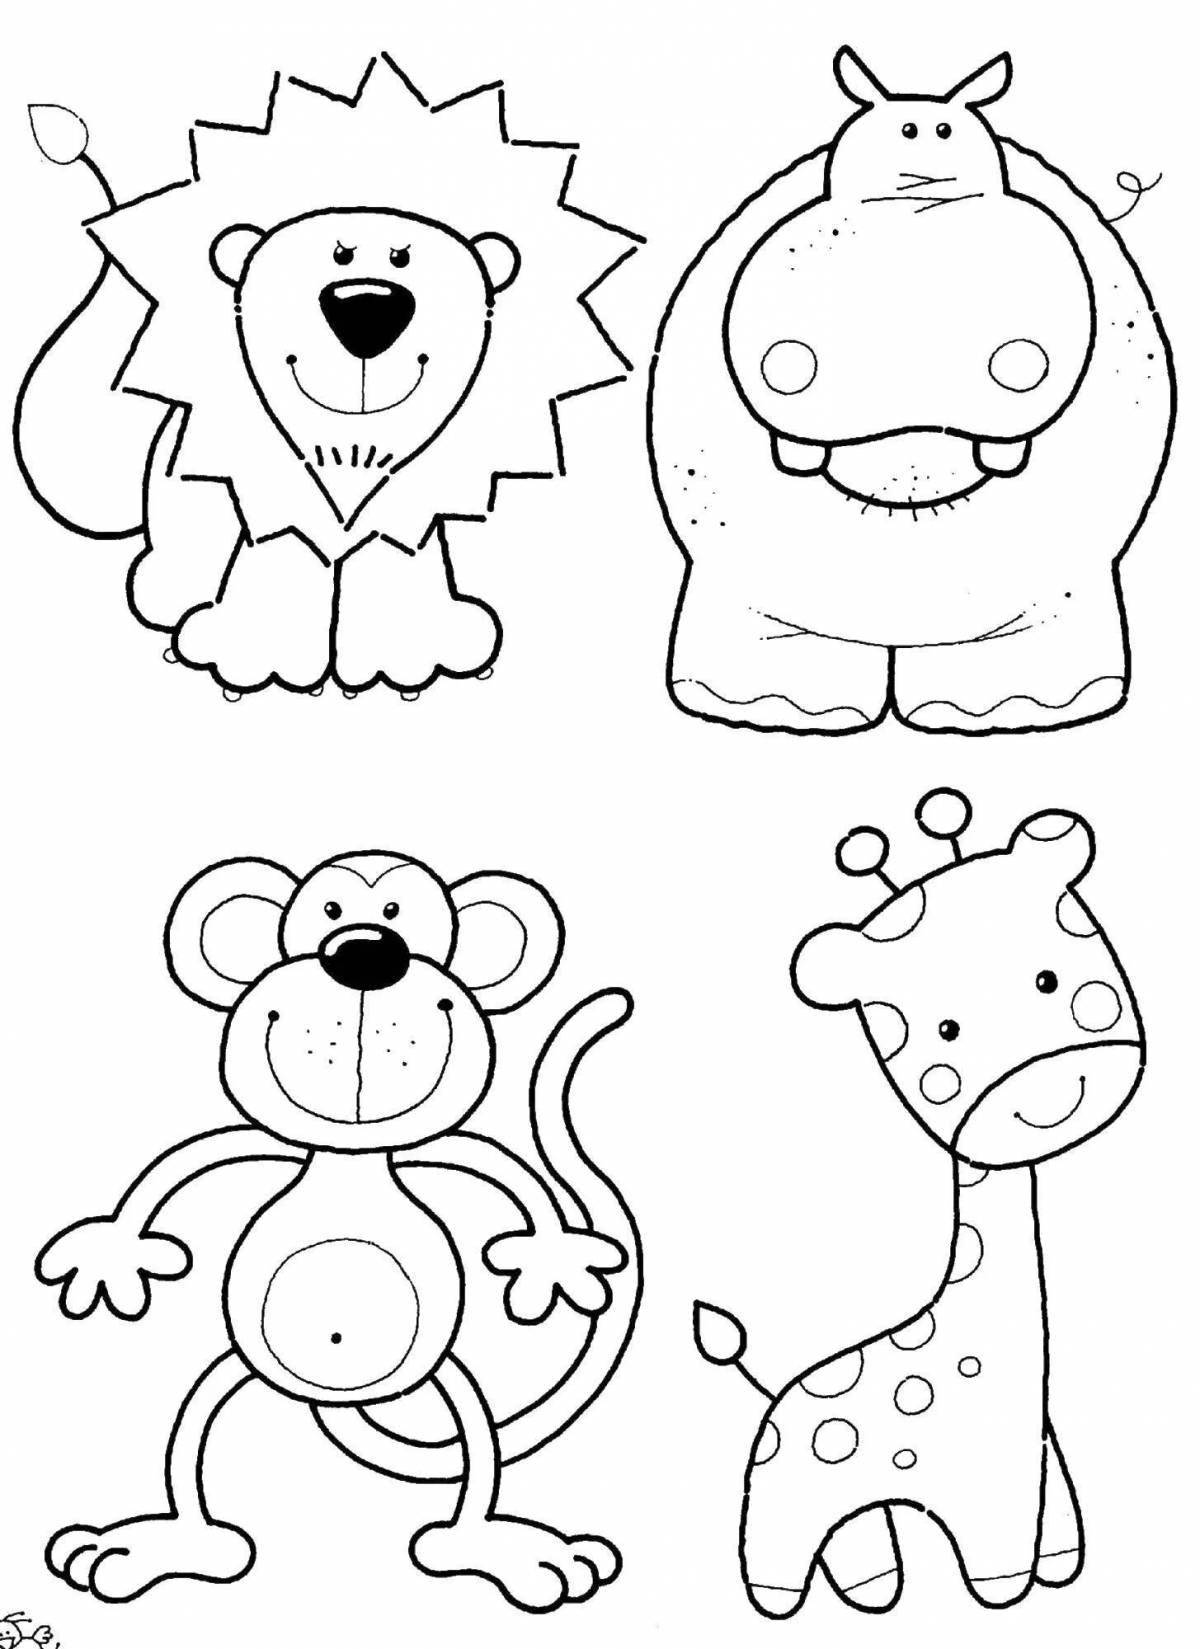 Fun coloring little animals